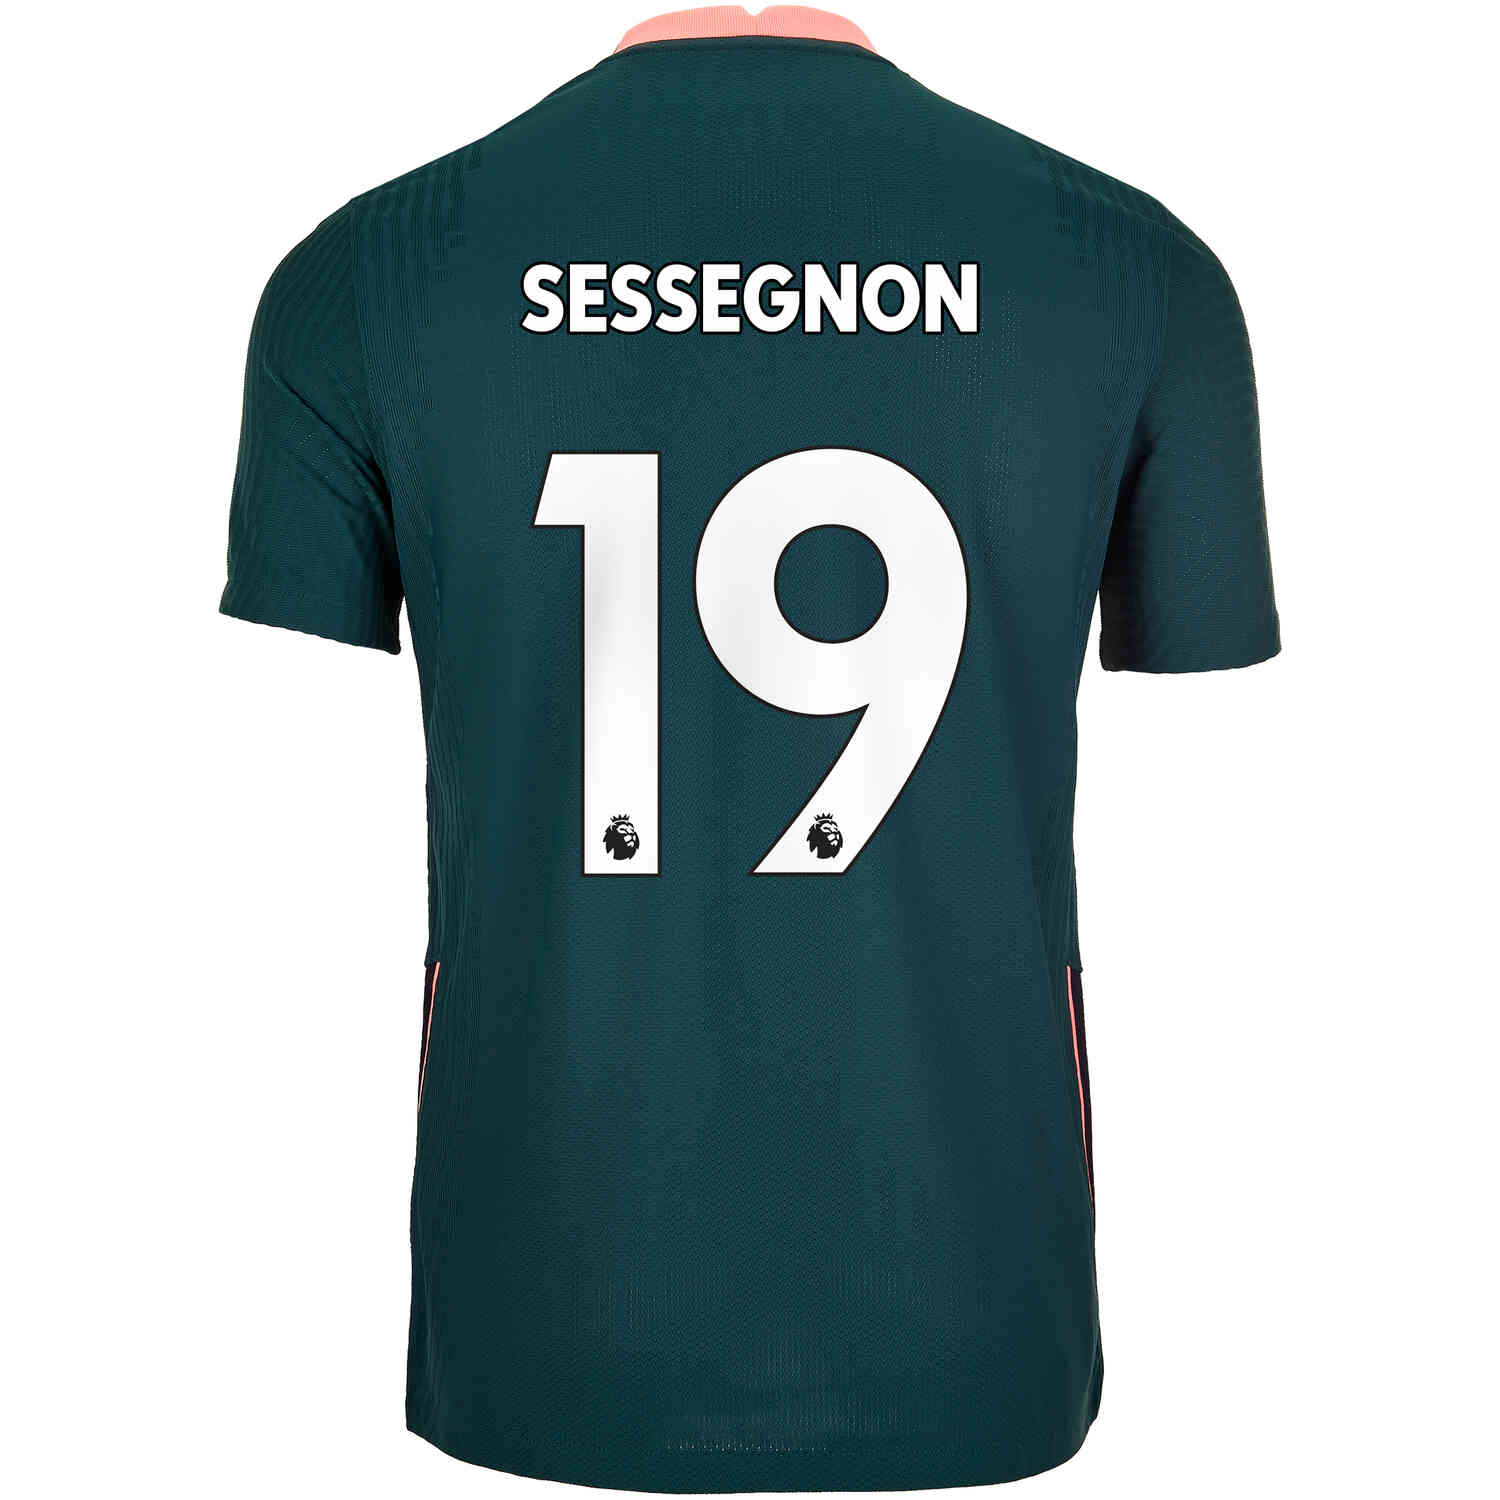 2020/21 Nike Ryan Sessegnon Tottenham Home Match Jersey - SoccerPro